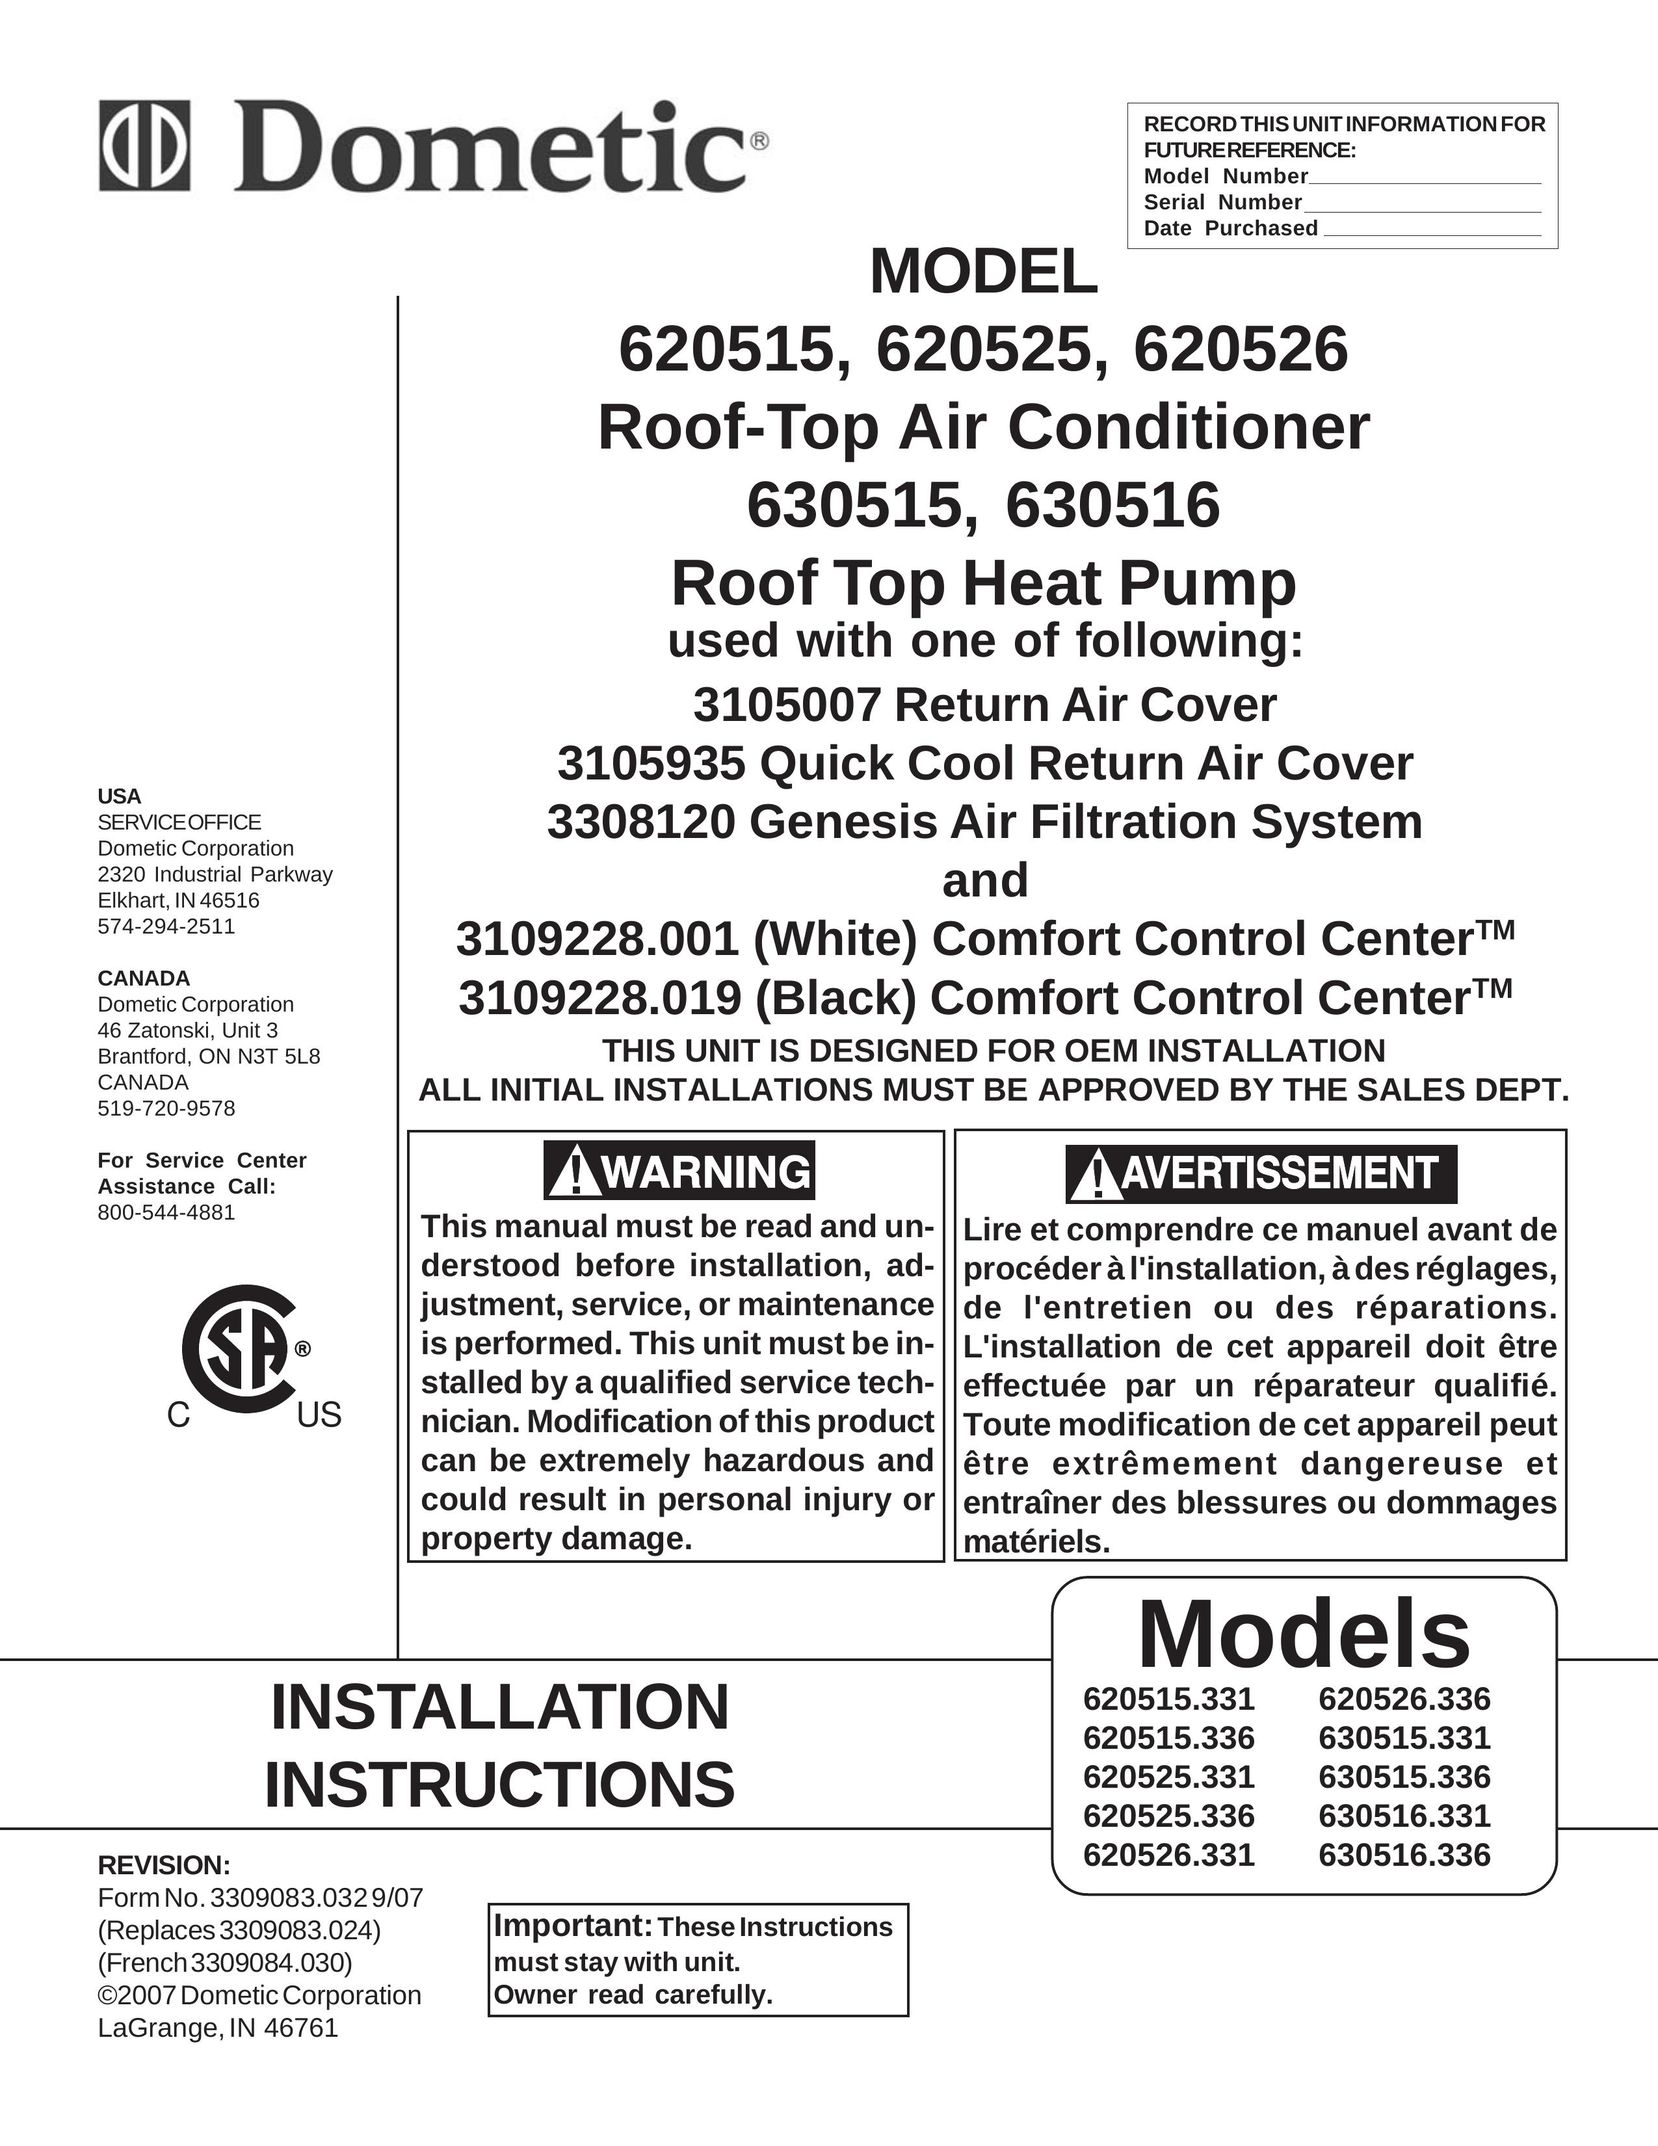 Dometic 620515.331 Air Conditioner User Manual